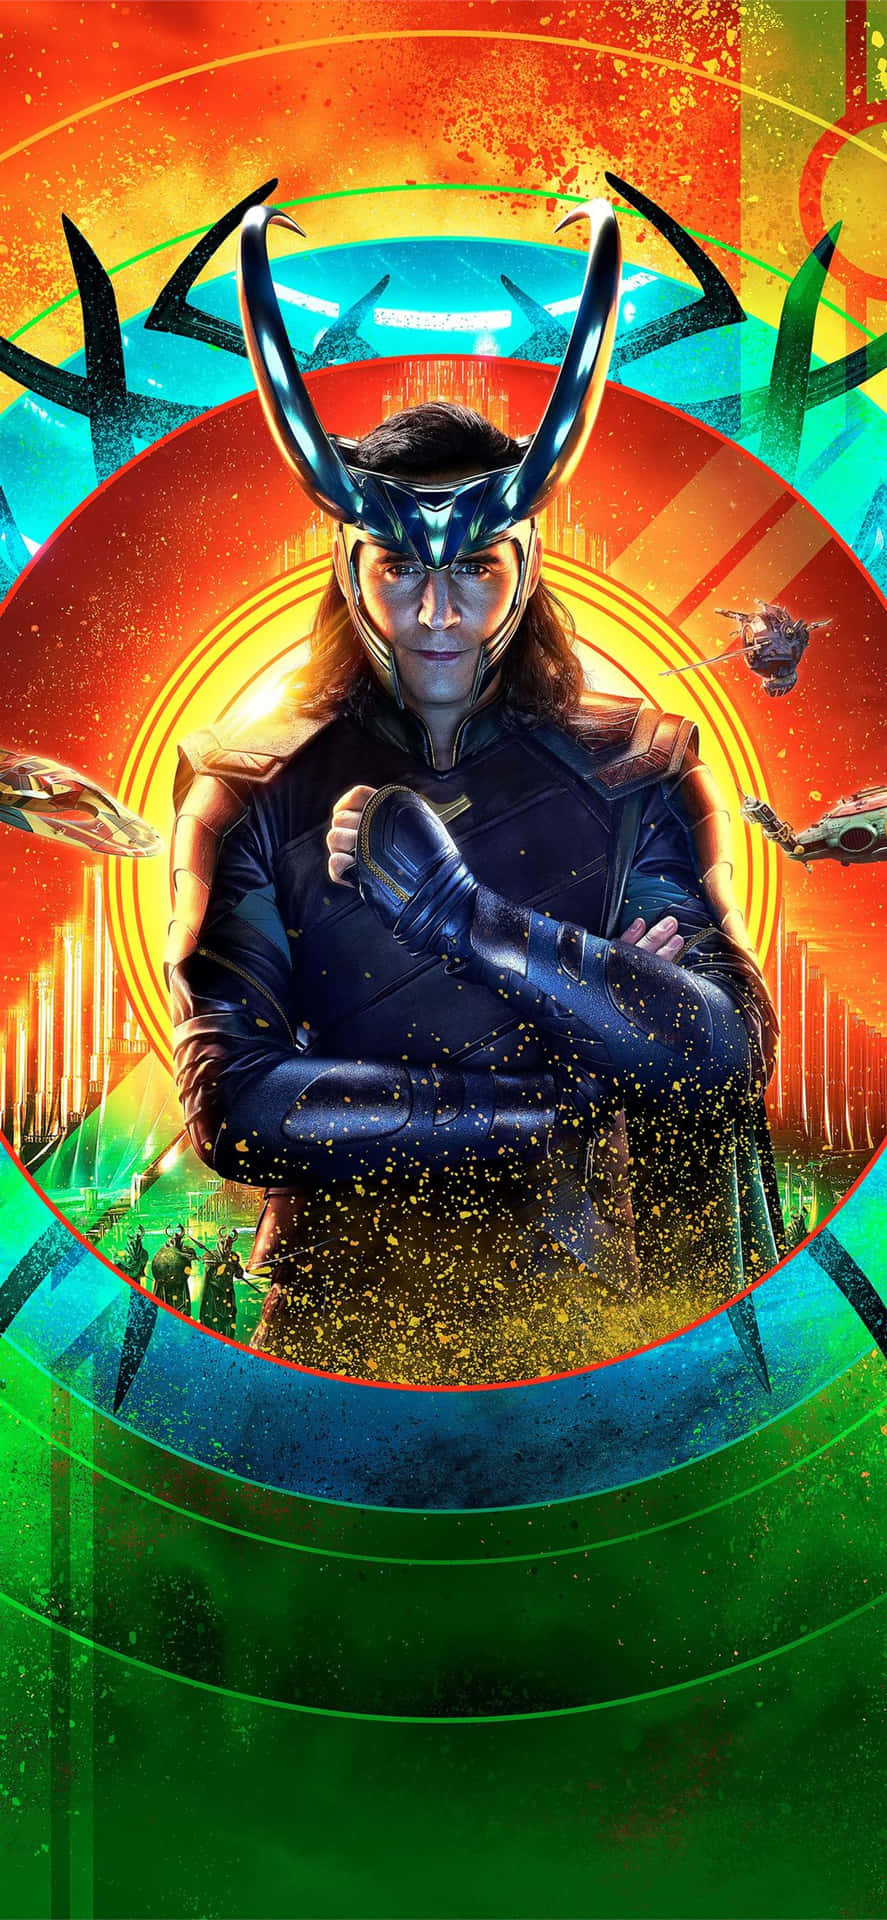 Intriguing Loki - The Master of Mischief